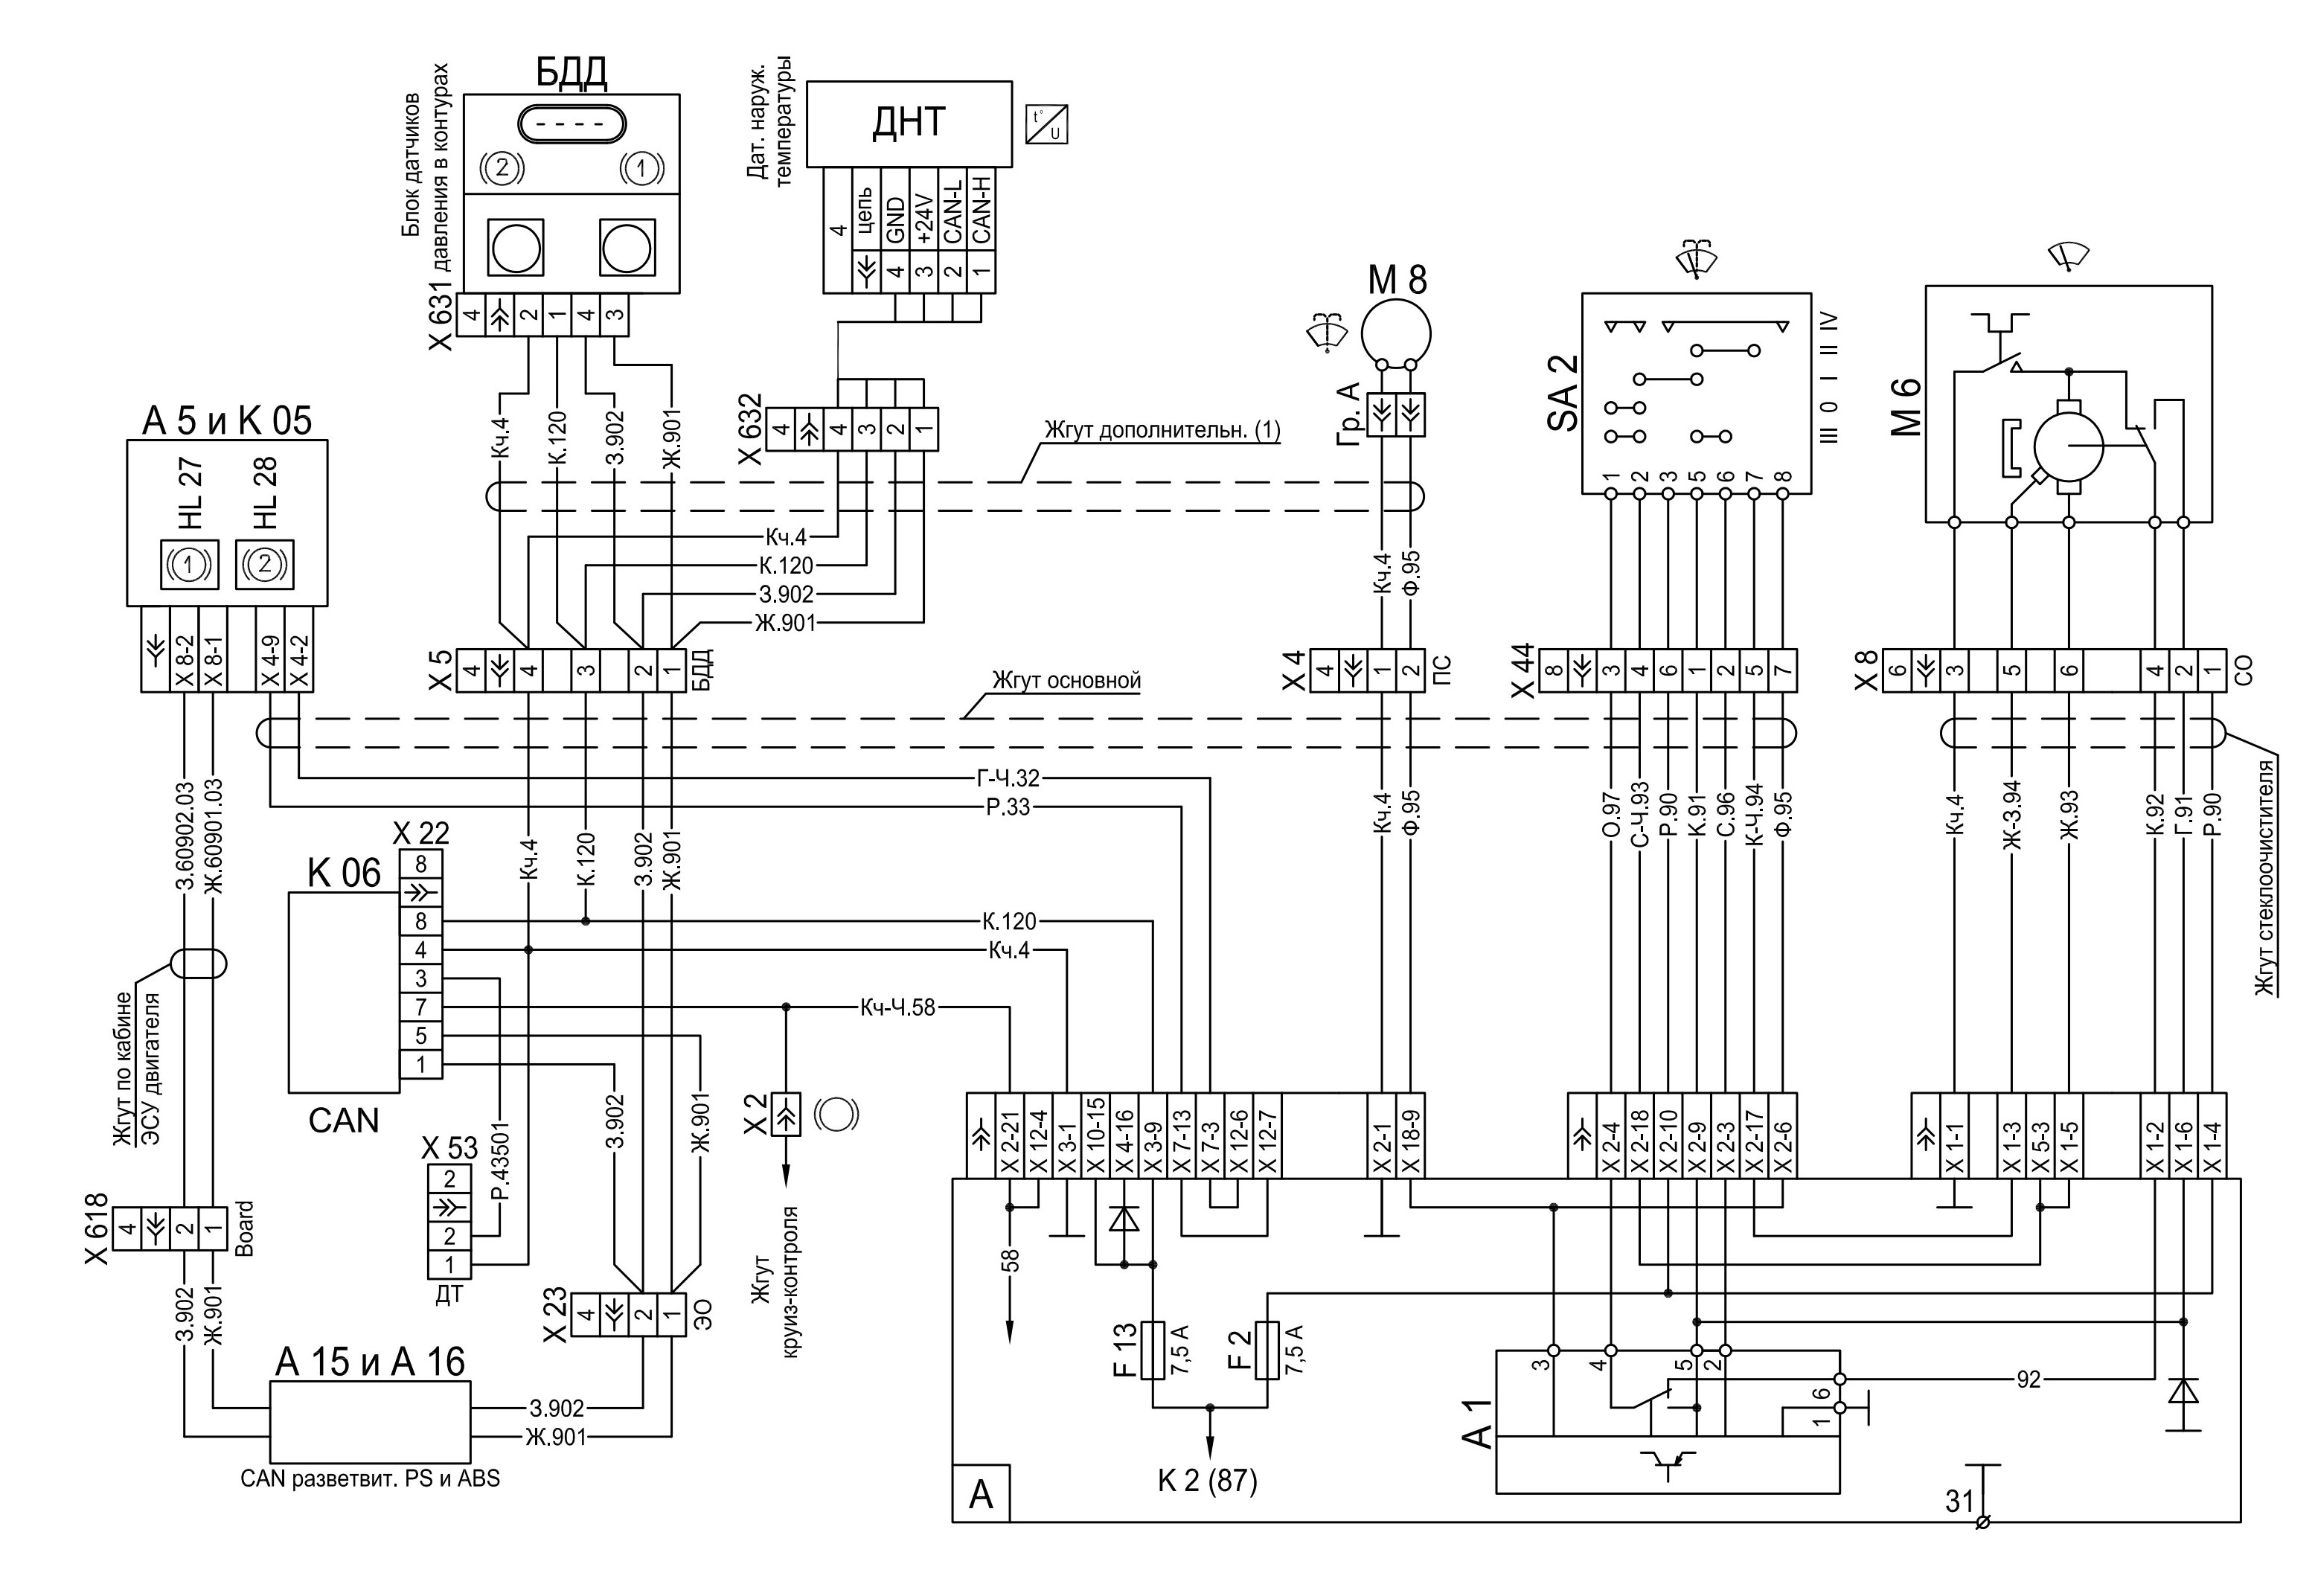 Схема тормозного привода автомобиля МАЗ-5551